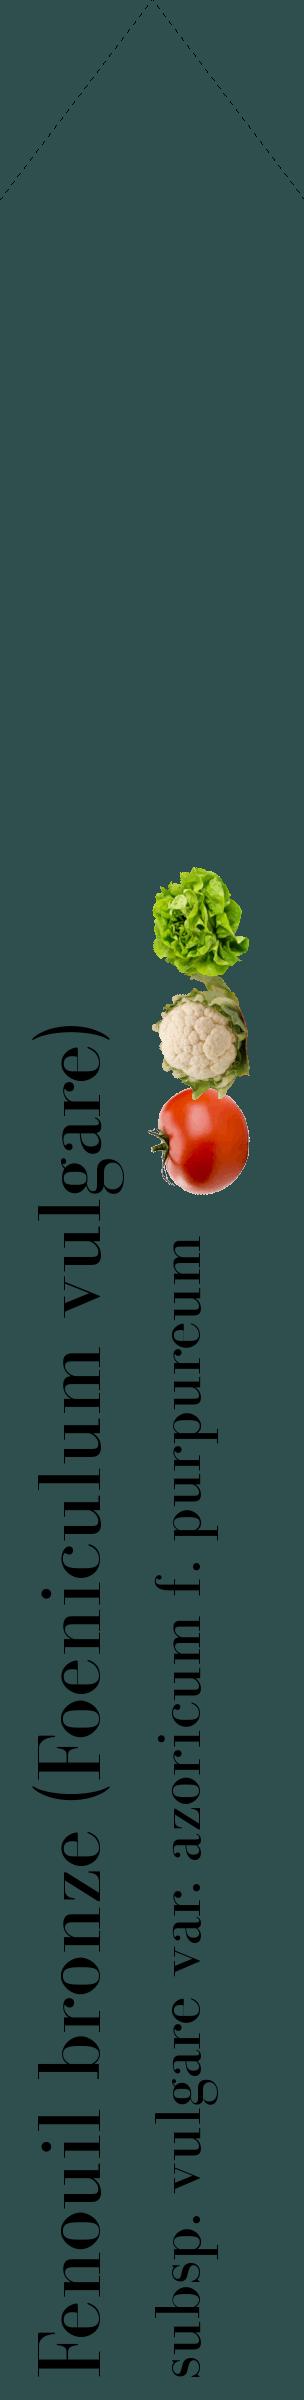 Étiquette de : Foeniculum vulgare subsp. vulgare var. azoricum f. purpureum - format c - style noire58_simplebod avec comestibilité simplifiée